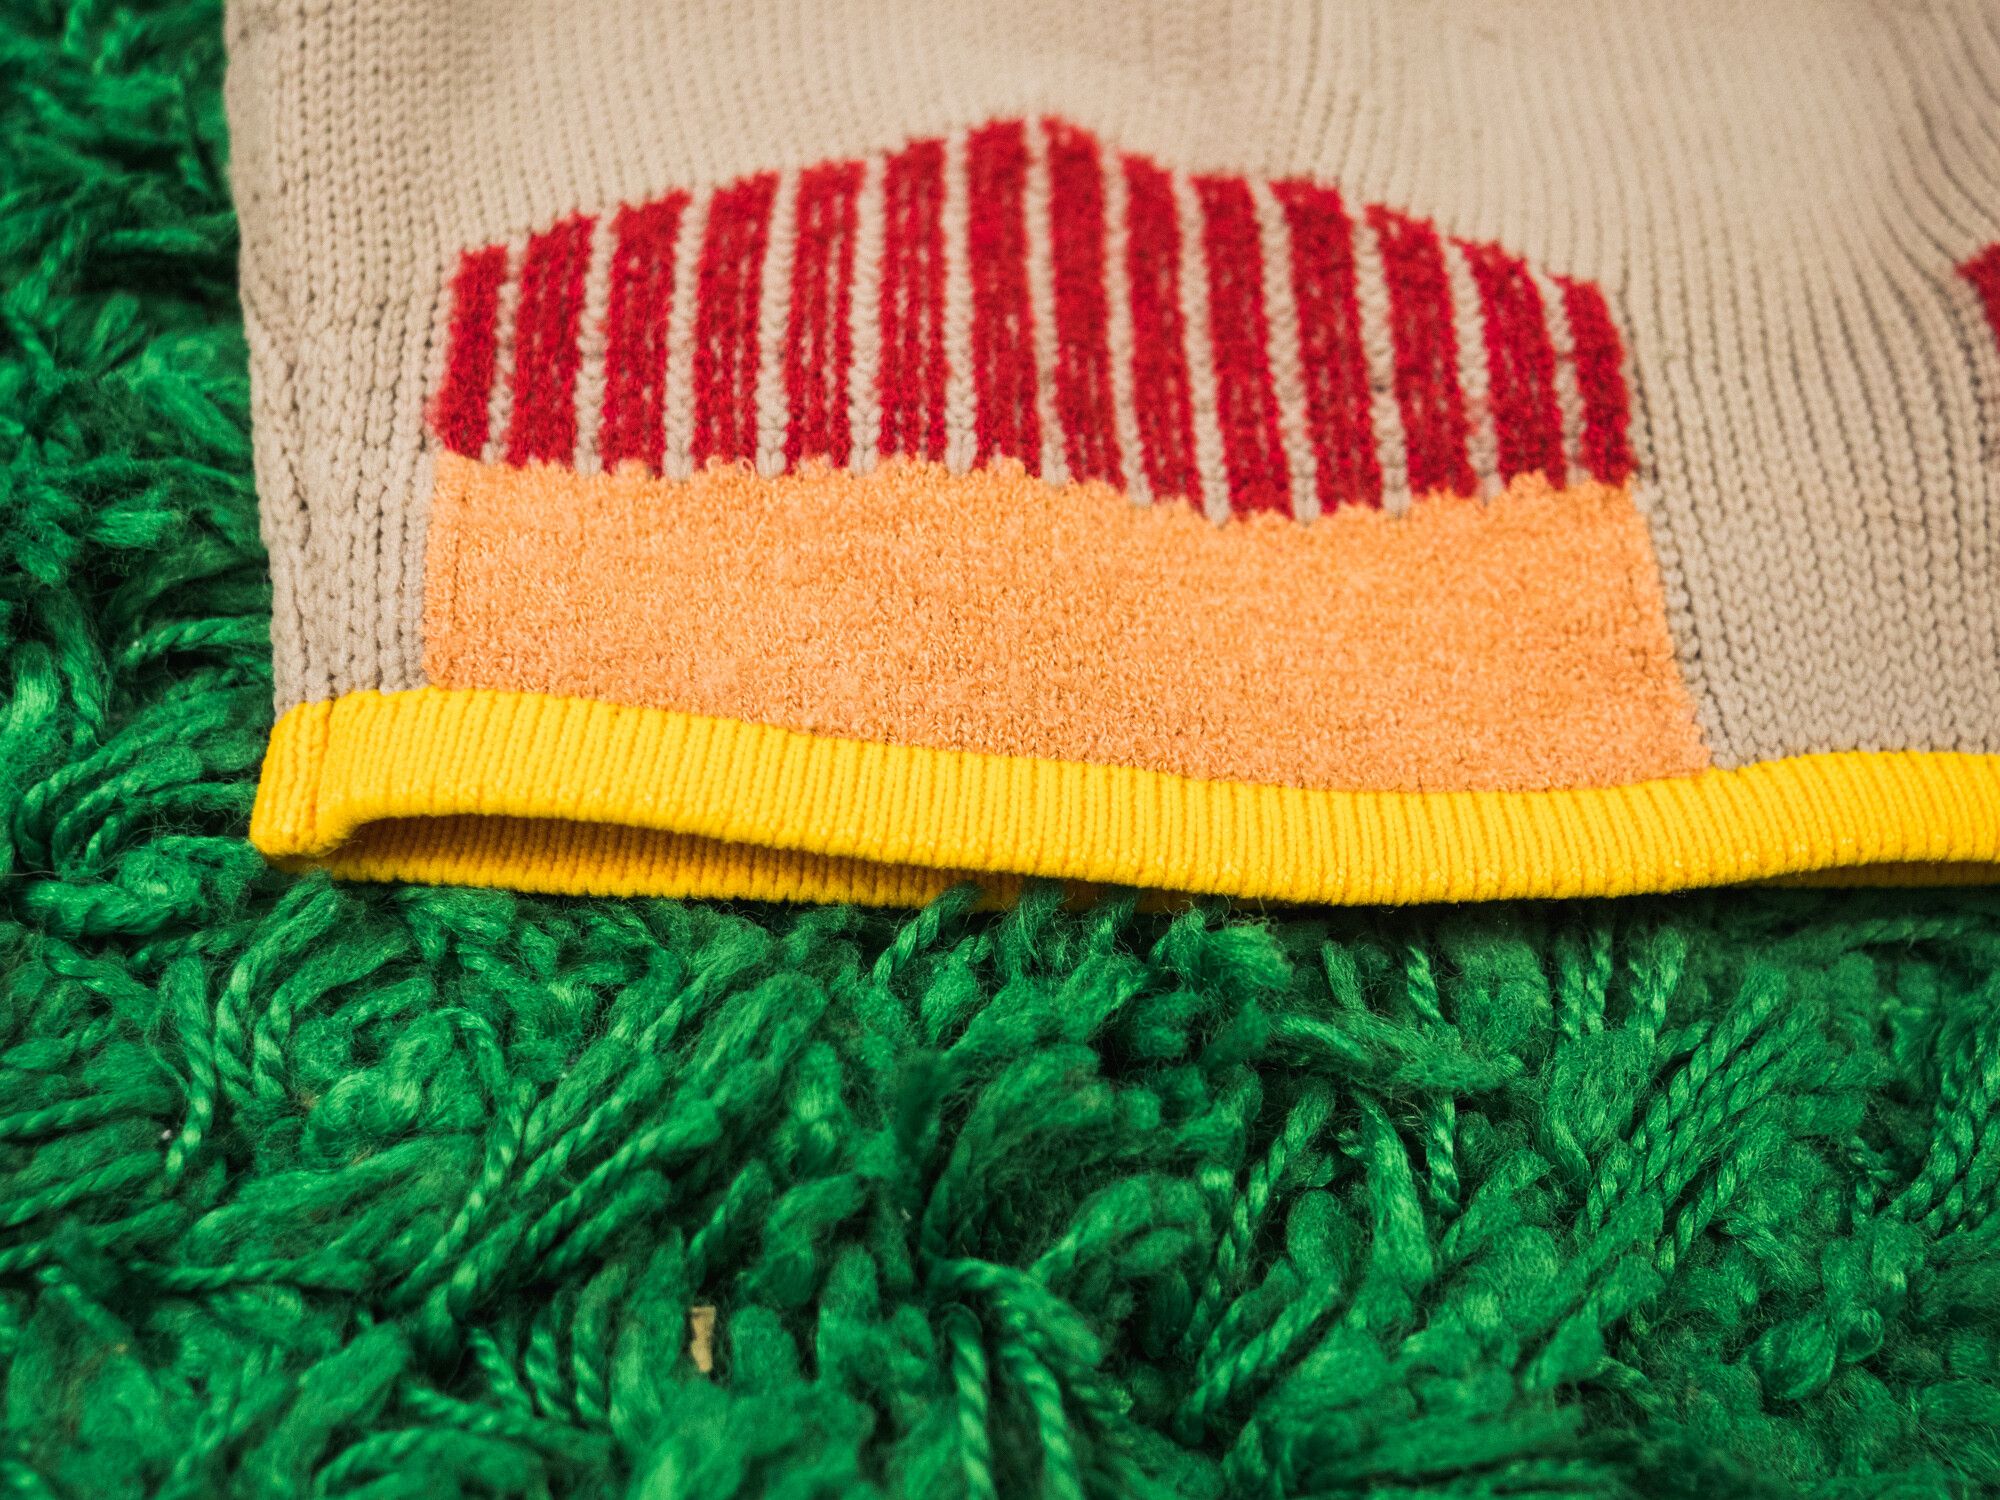 Yeezy Season YEEZY Season 3 - Sock Knit Graphic Crop Top Knitted Size XS / US 0-2 / IT 36-38 - 6 Thumbnail